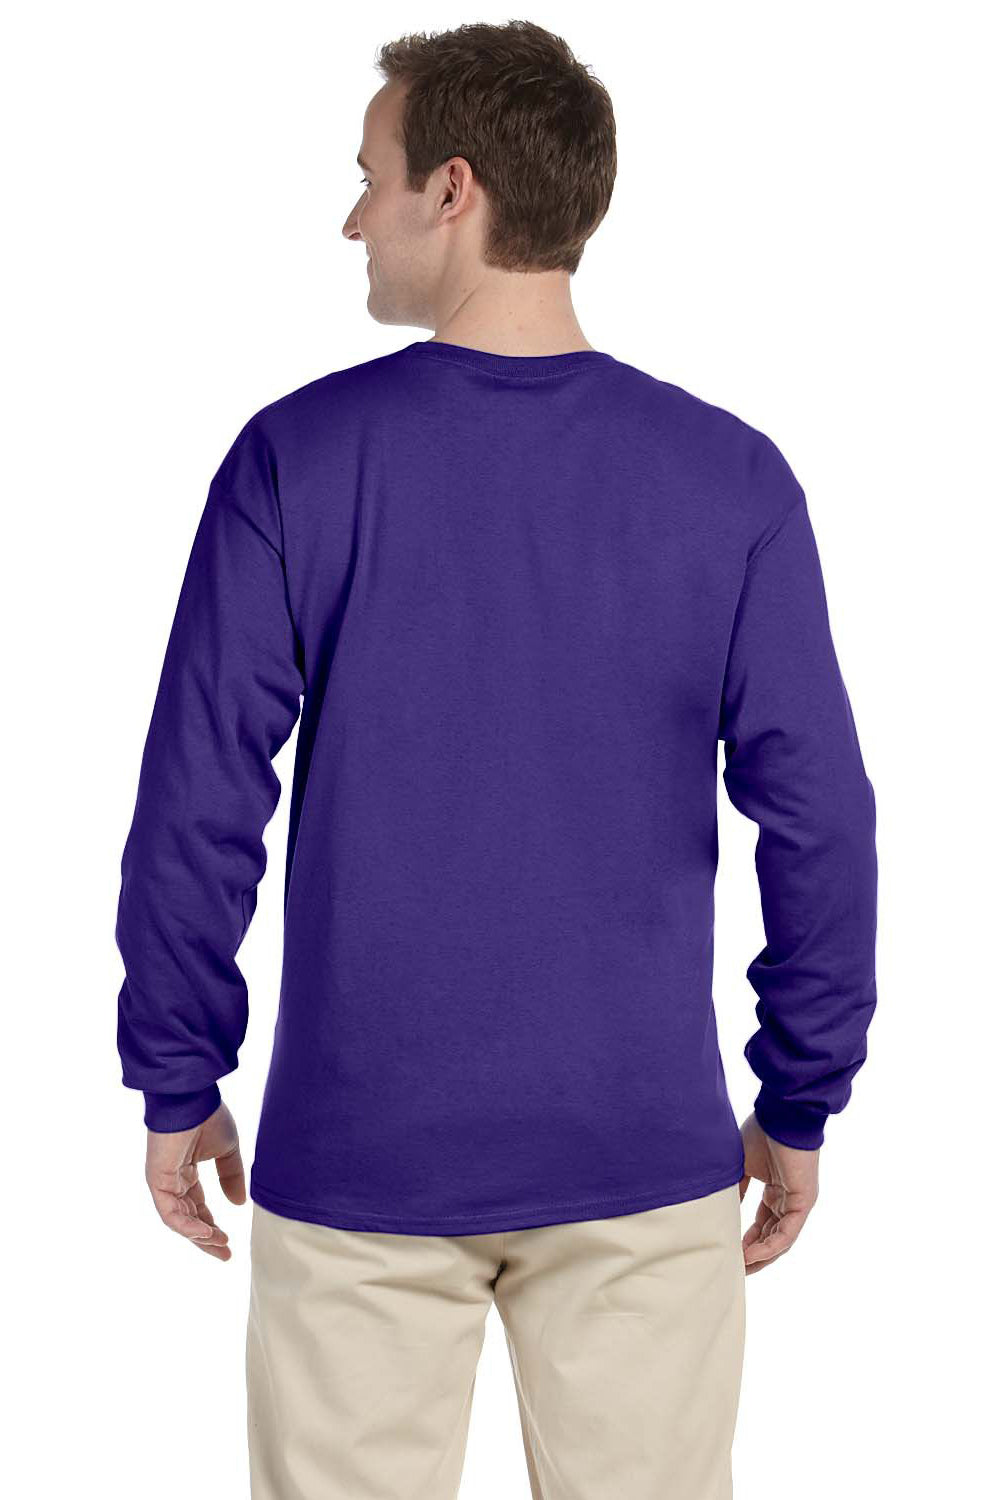 Fruit Of The Loom 4930 Mens HD Jersey Long Sleeve Crewneck T-Shirt Purple Back